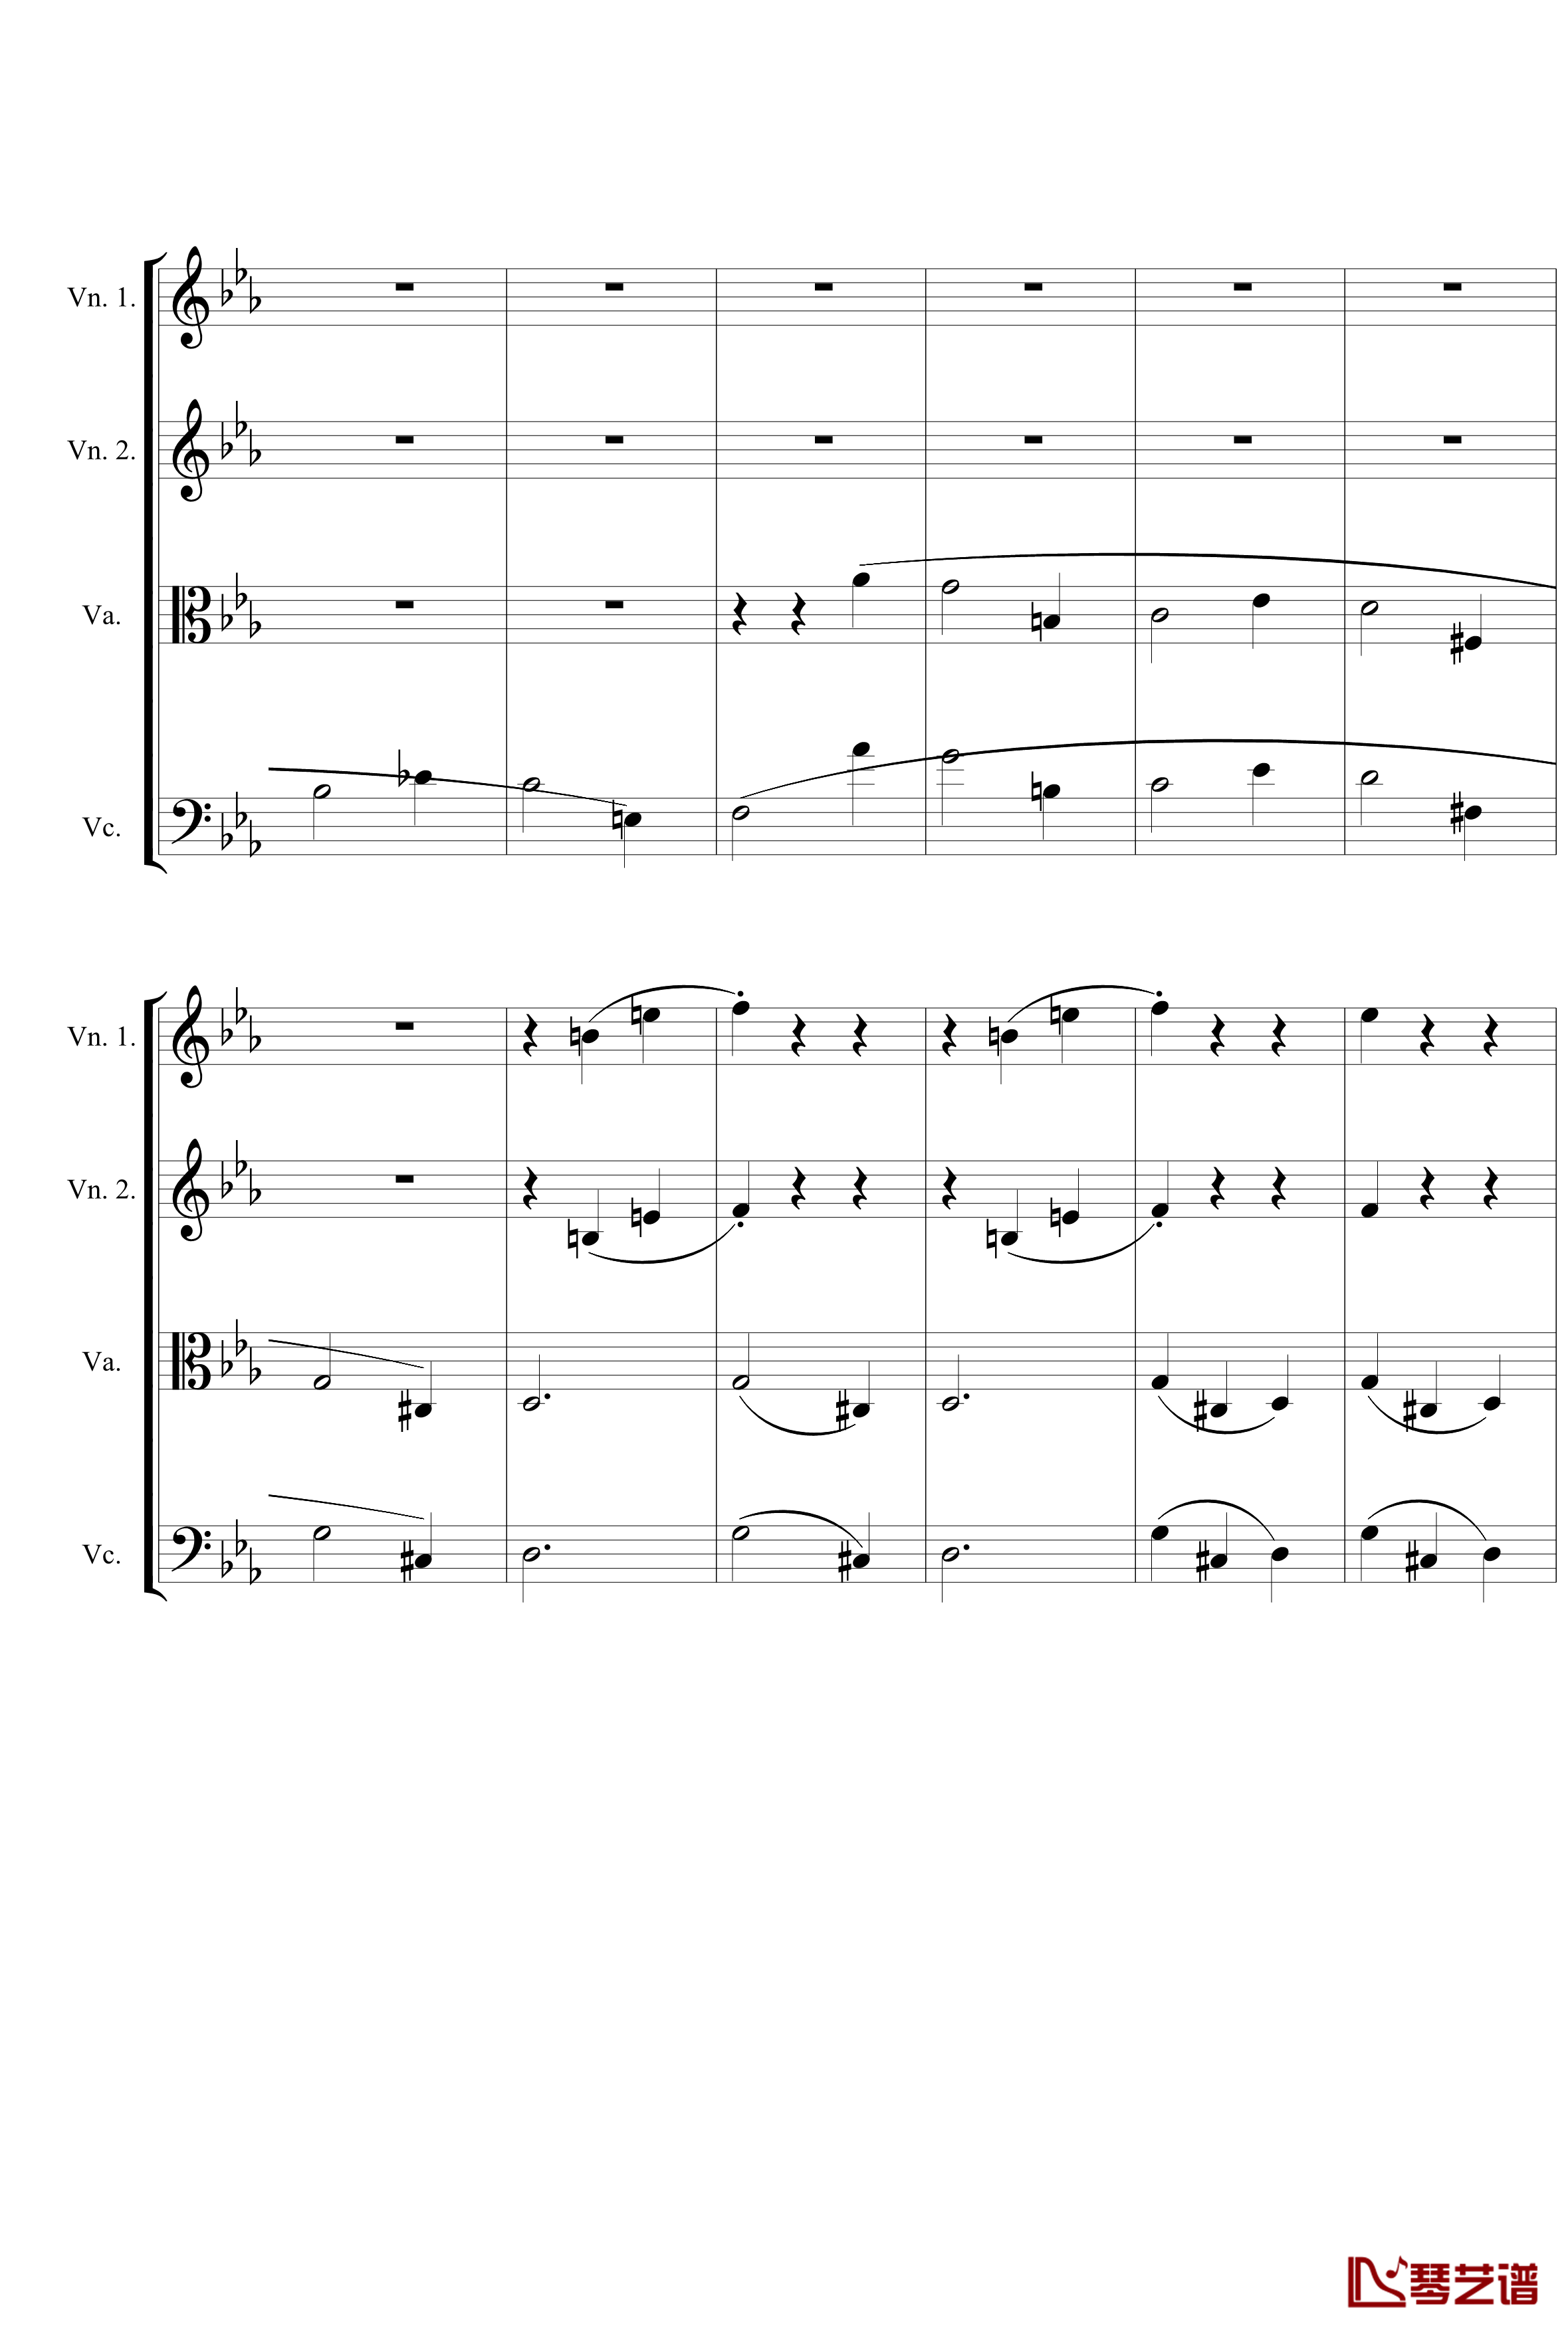 Symphony No.5 in C Minor 3rd钢琴谱-String quartet-贝多芬-beethoven5